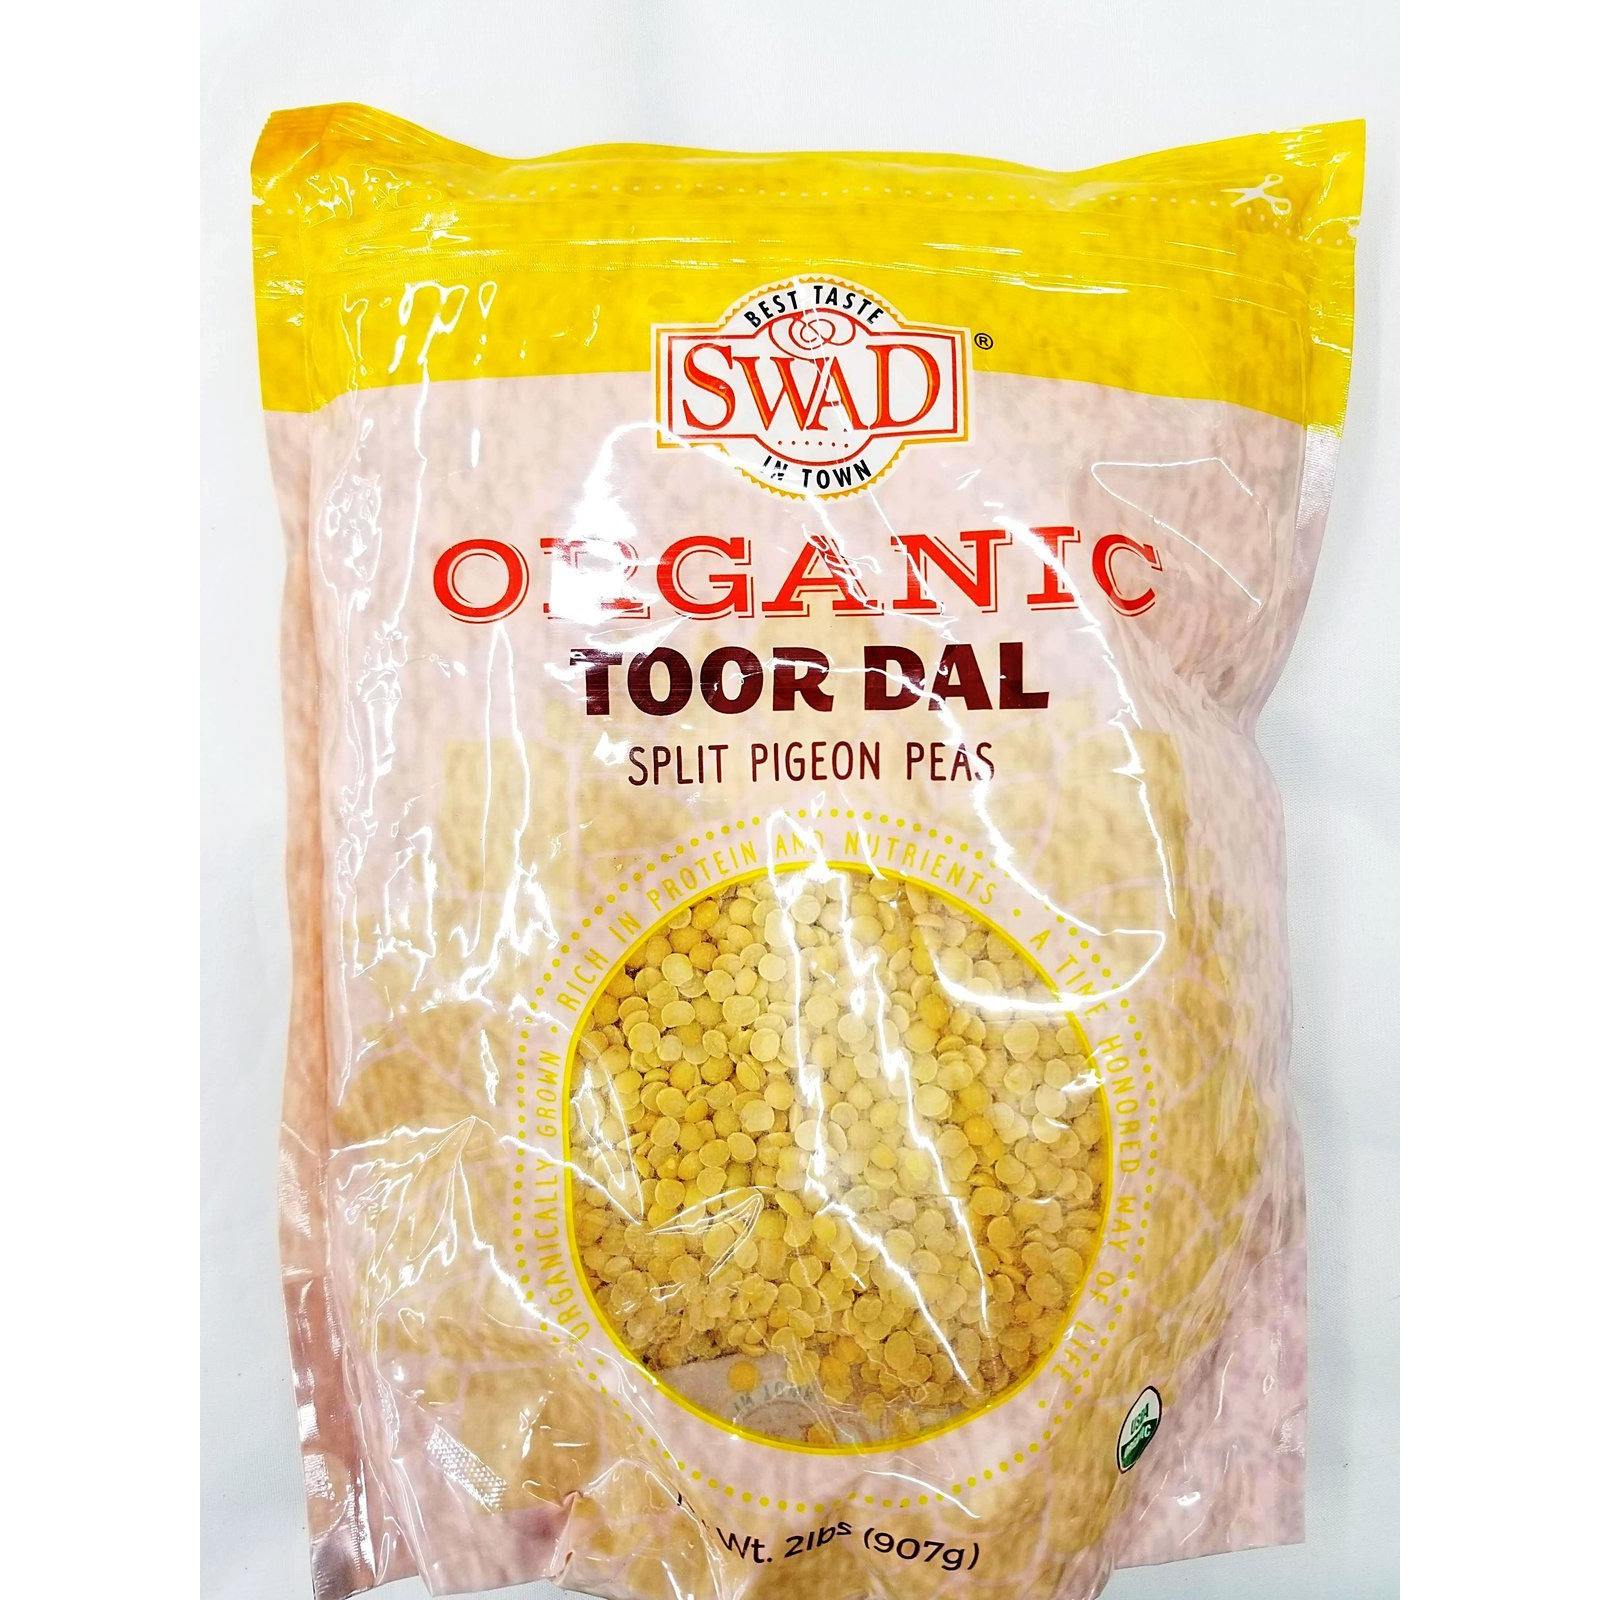 Swad Organic Toor Dal 2 lbs